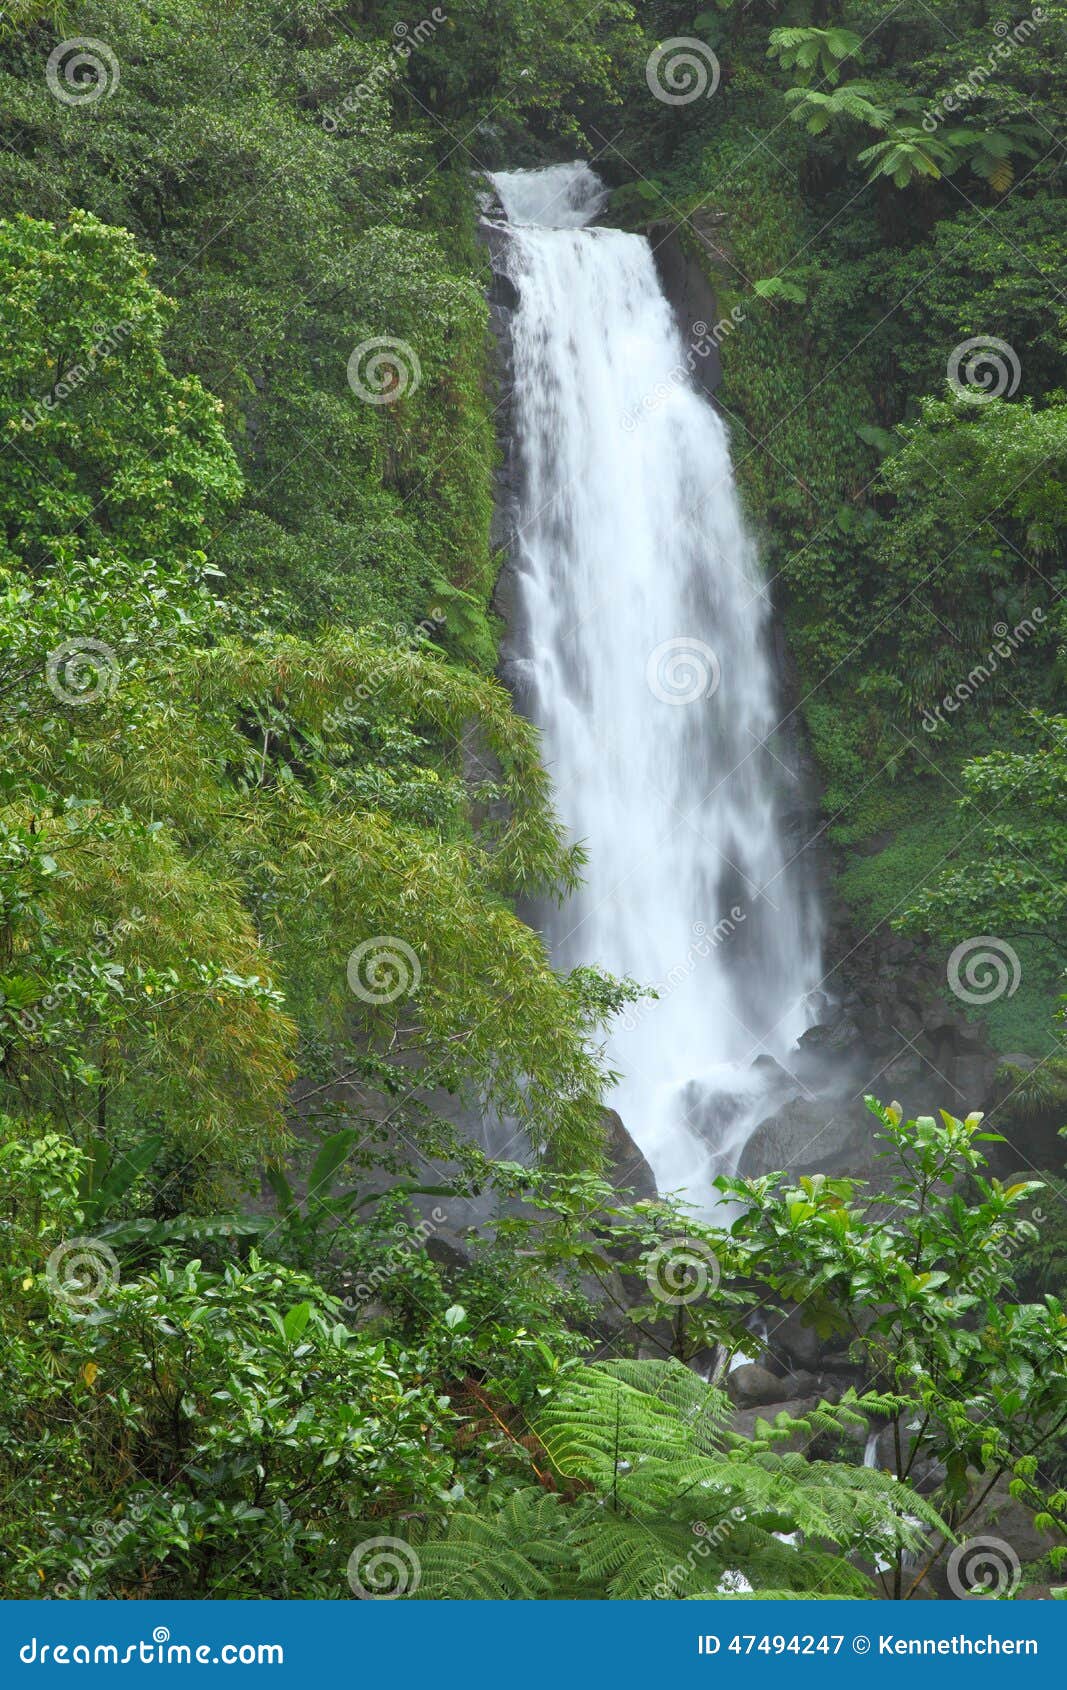 trafalgar falls in dominica ,caribbean islands